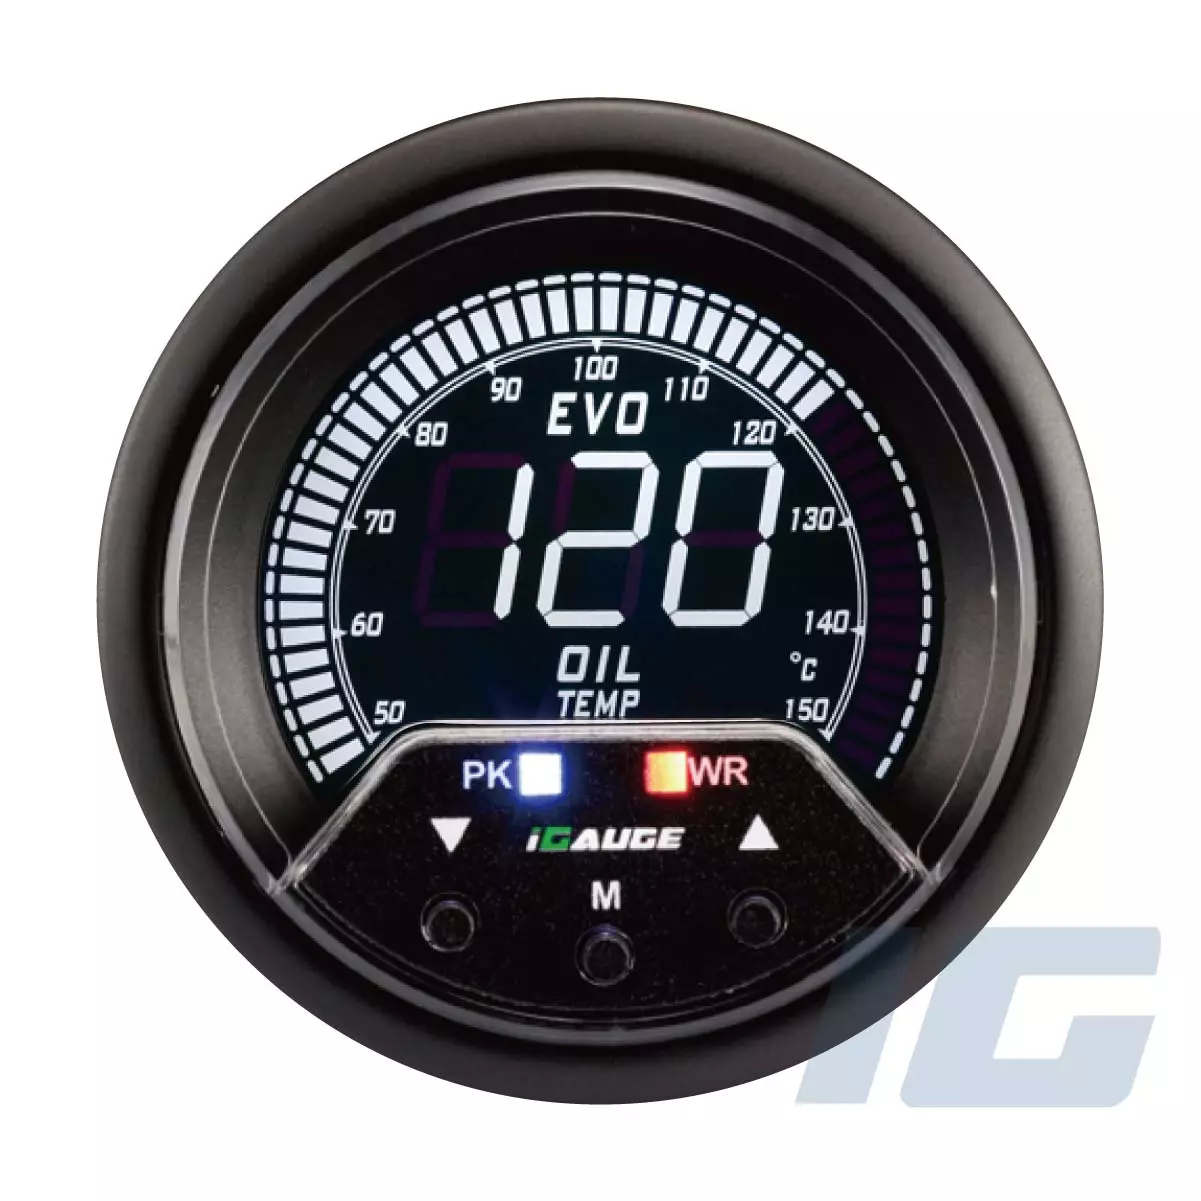 EVO PK Series 60mm LCD Perfomece Car Gauges - Oil Temp Gauge with Sensor & Warning & Peak for Your Sport Racing Car - (°C / °F)